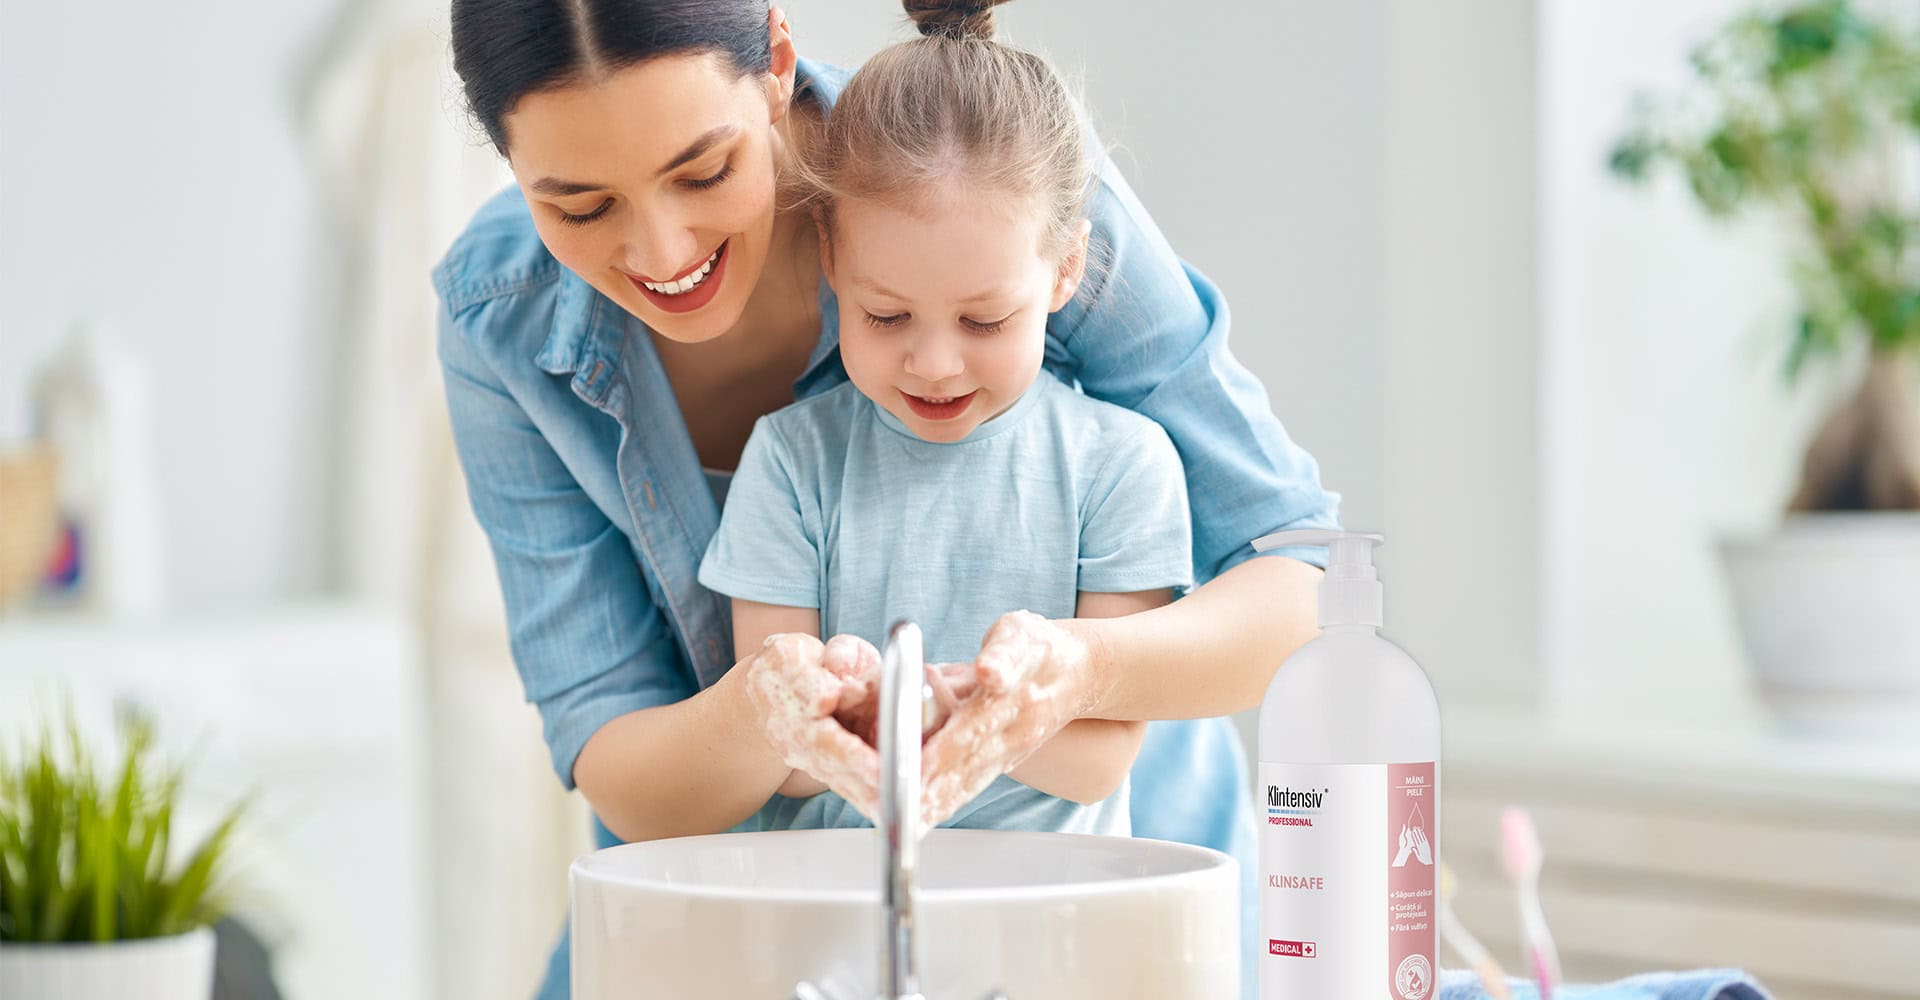 paduchi - Importanța igienei personale pentru copii